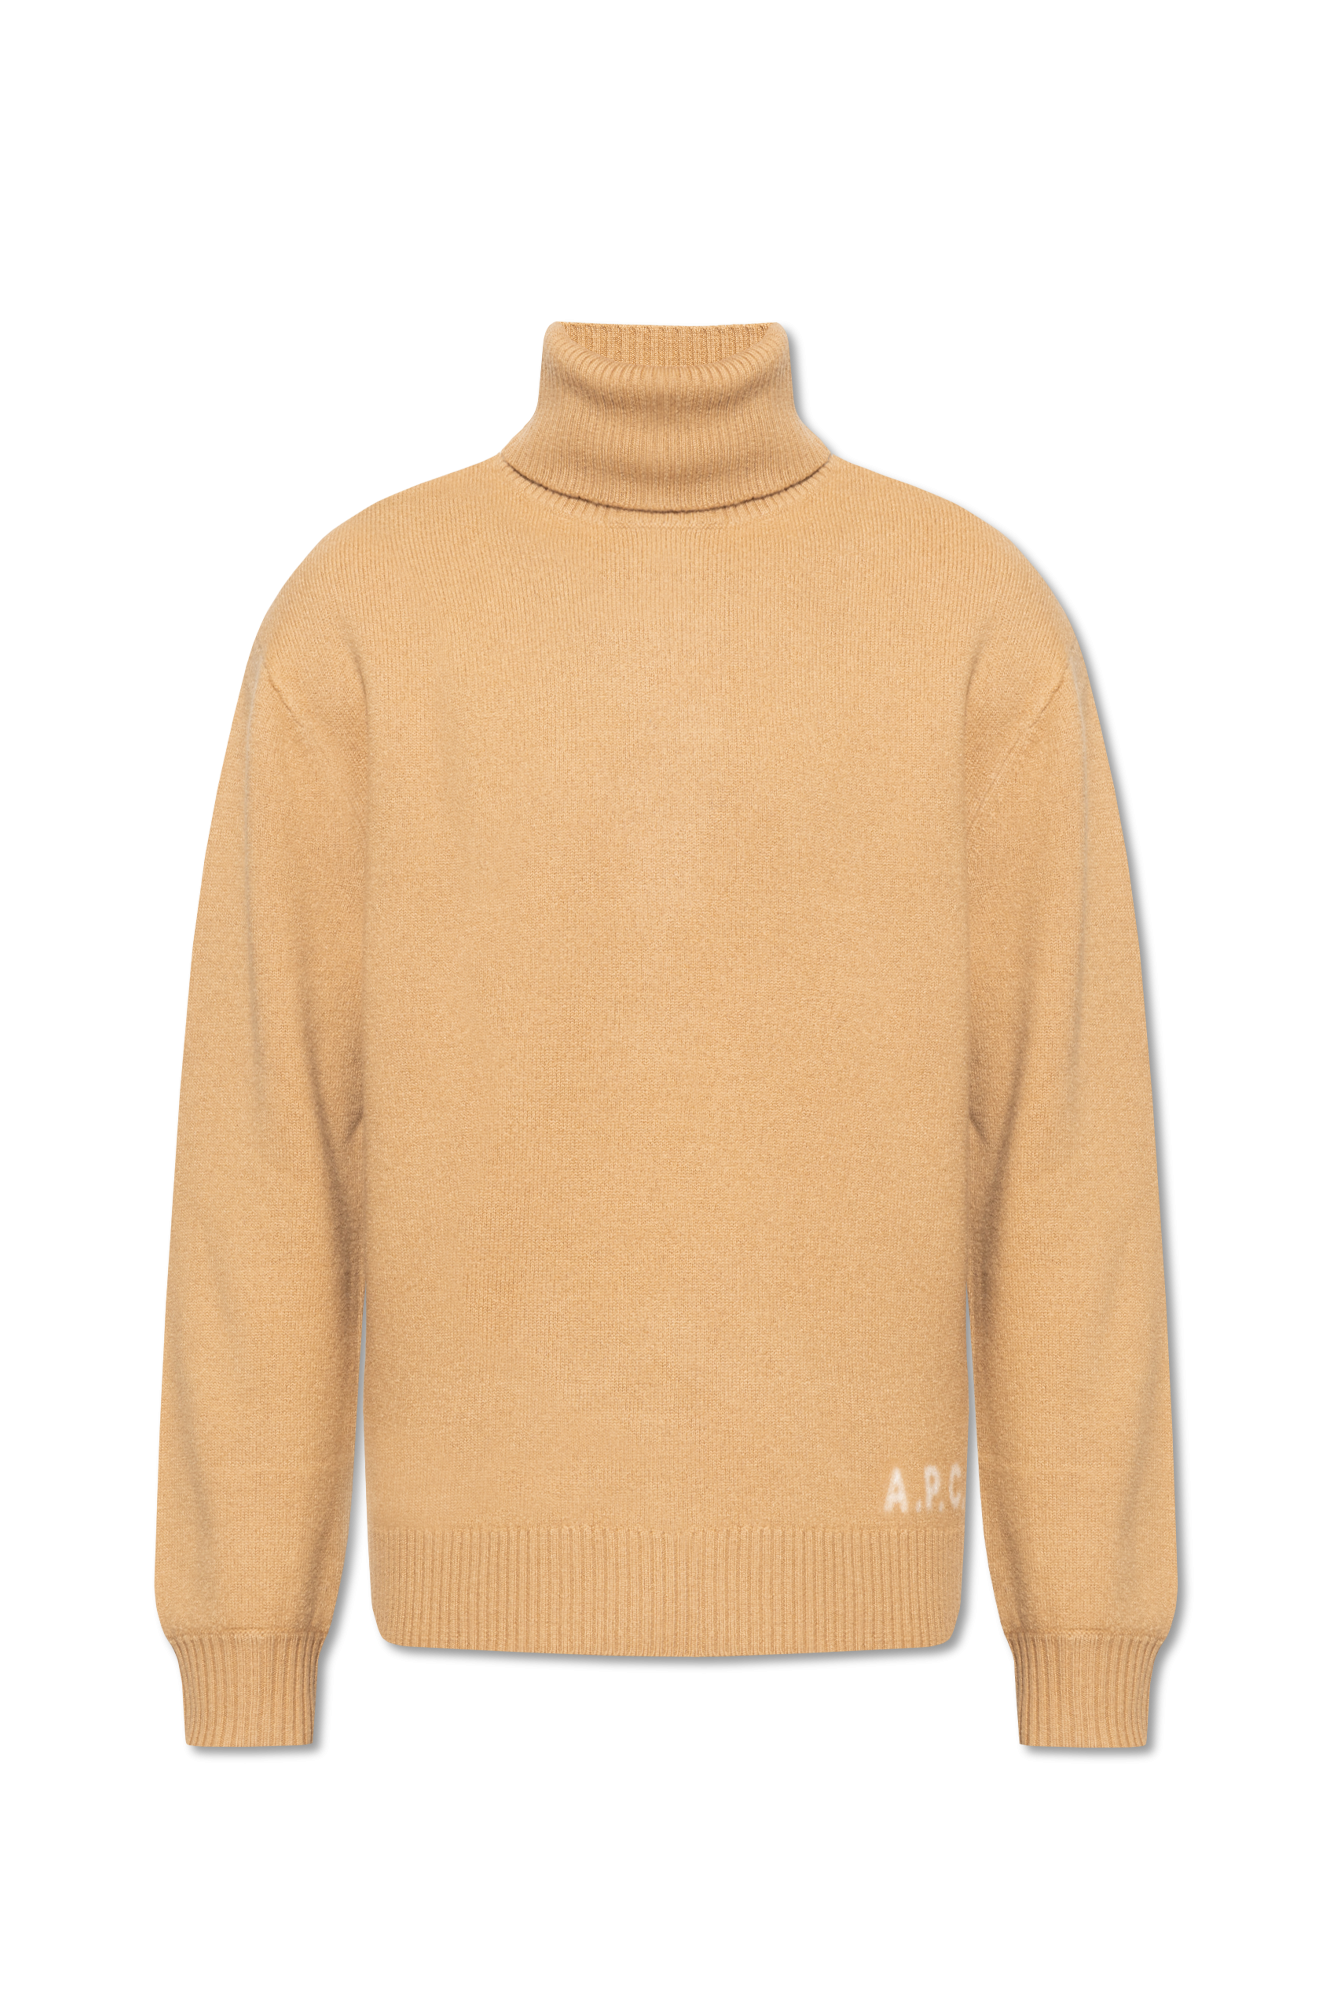 A.P.C. ‘Walter’ turtleneck sweater